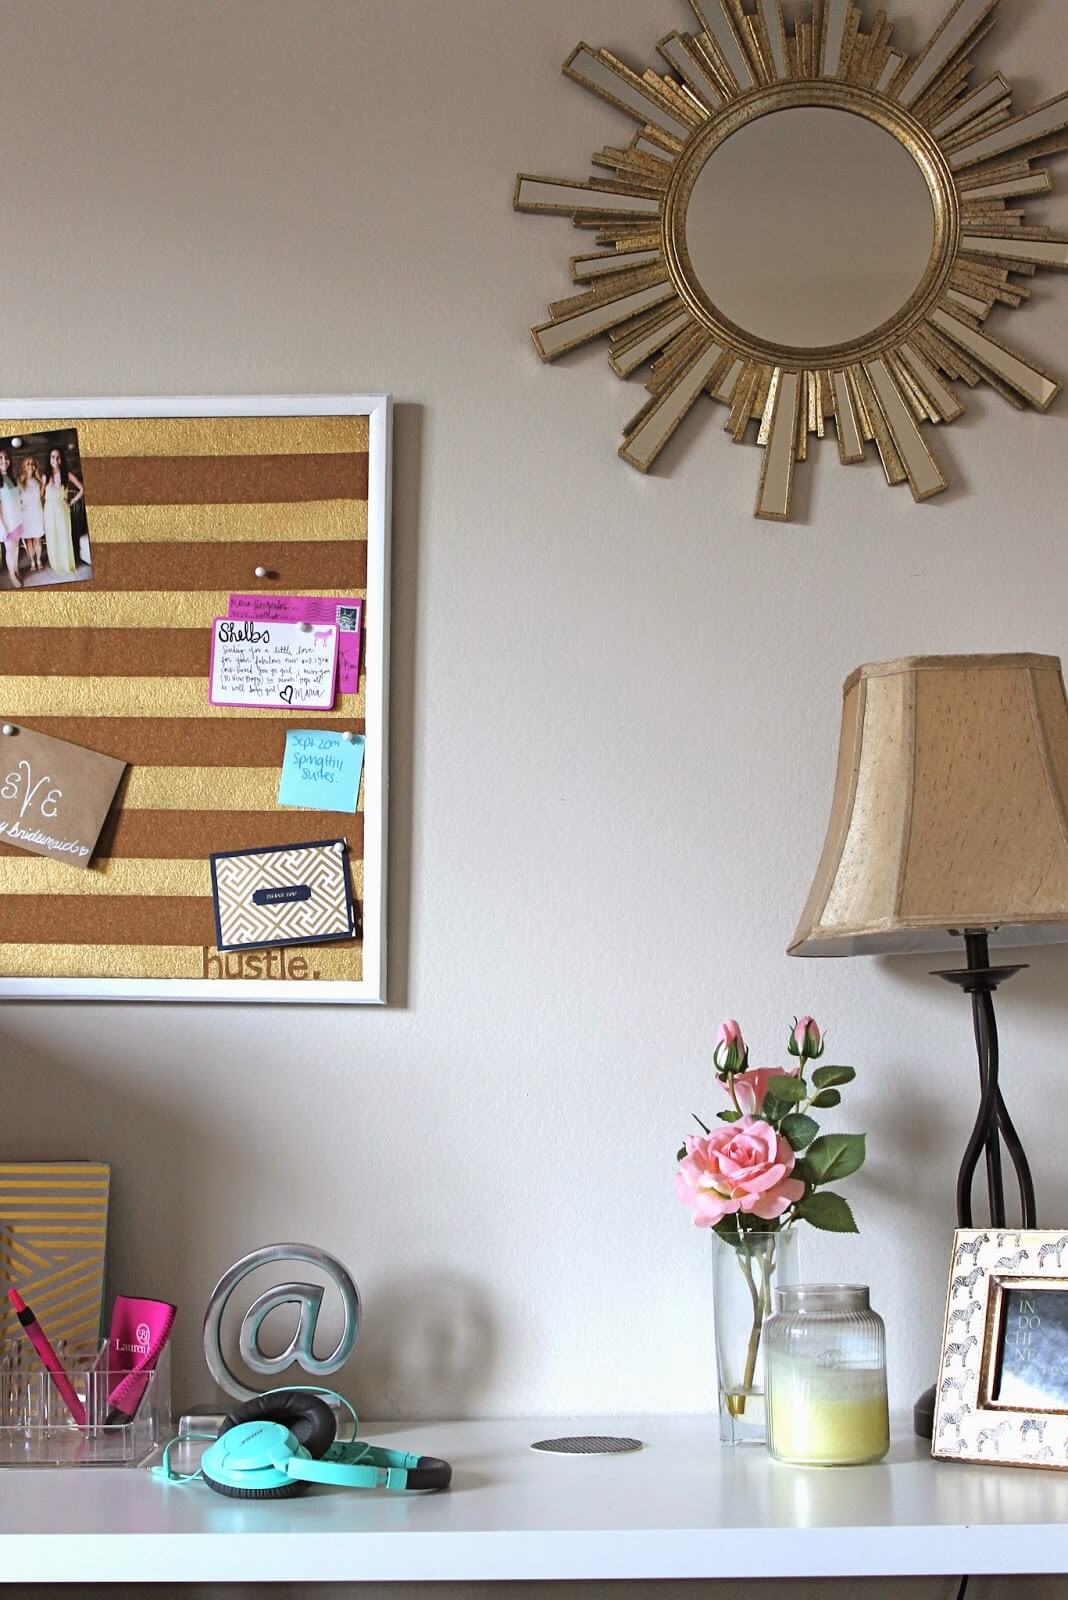 15 Super Practical DIY Corkboard Ideas That Will Help You Stay Organized